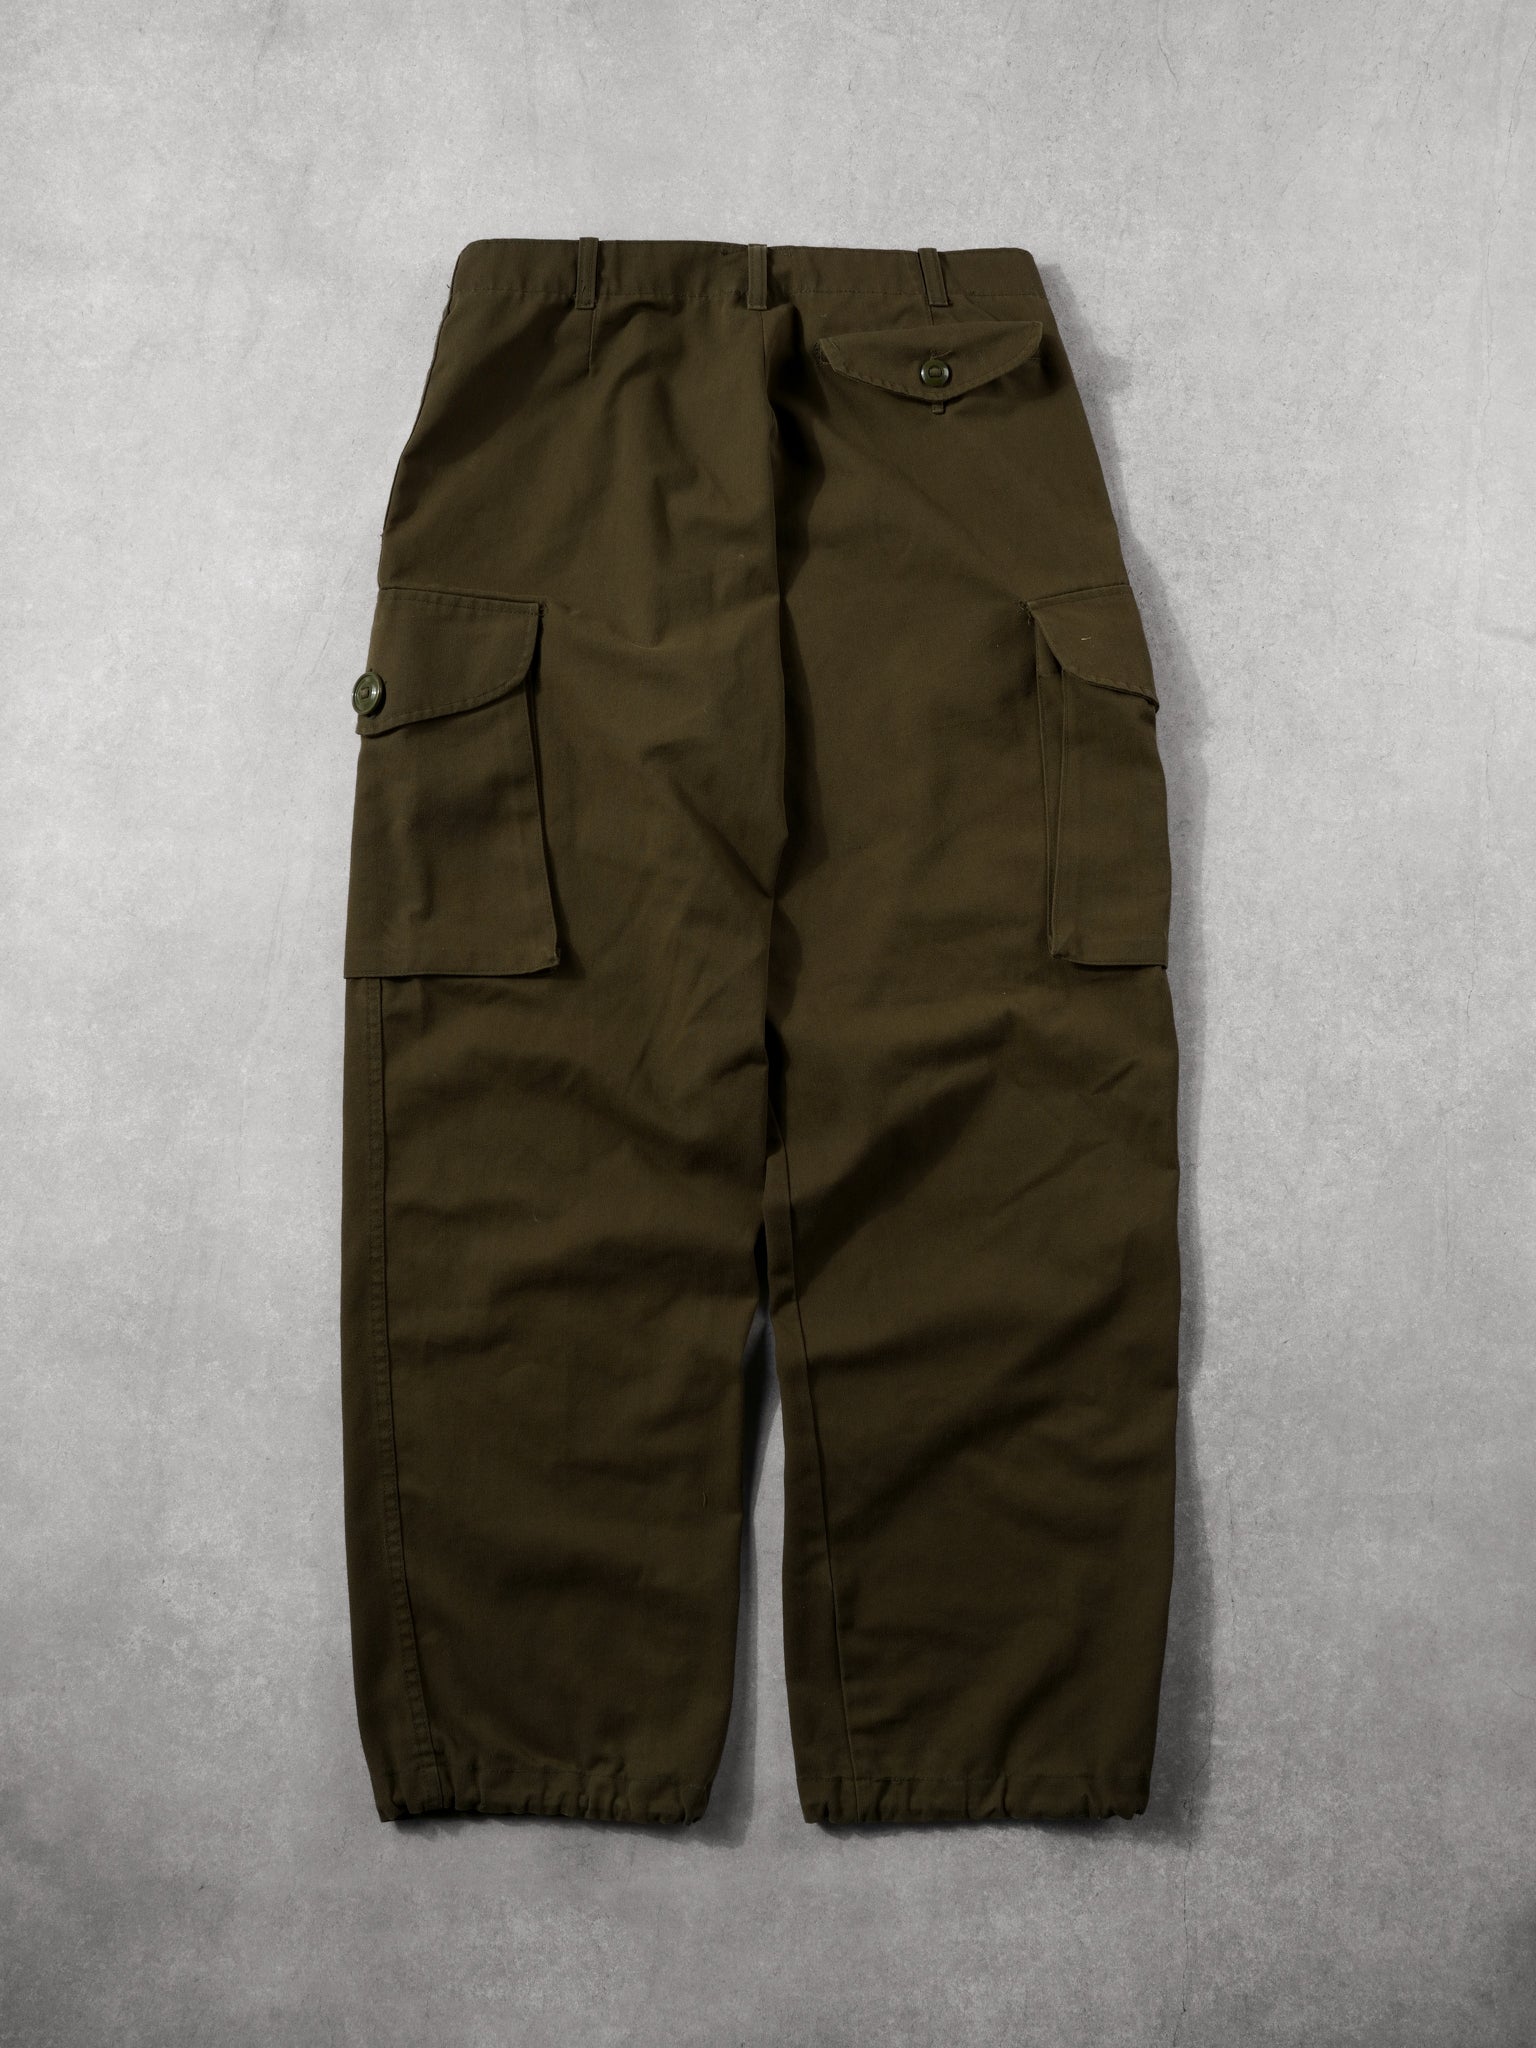 Vintage 80s Army Parachute Cargo Pants (34x30)